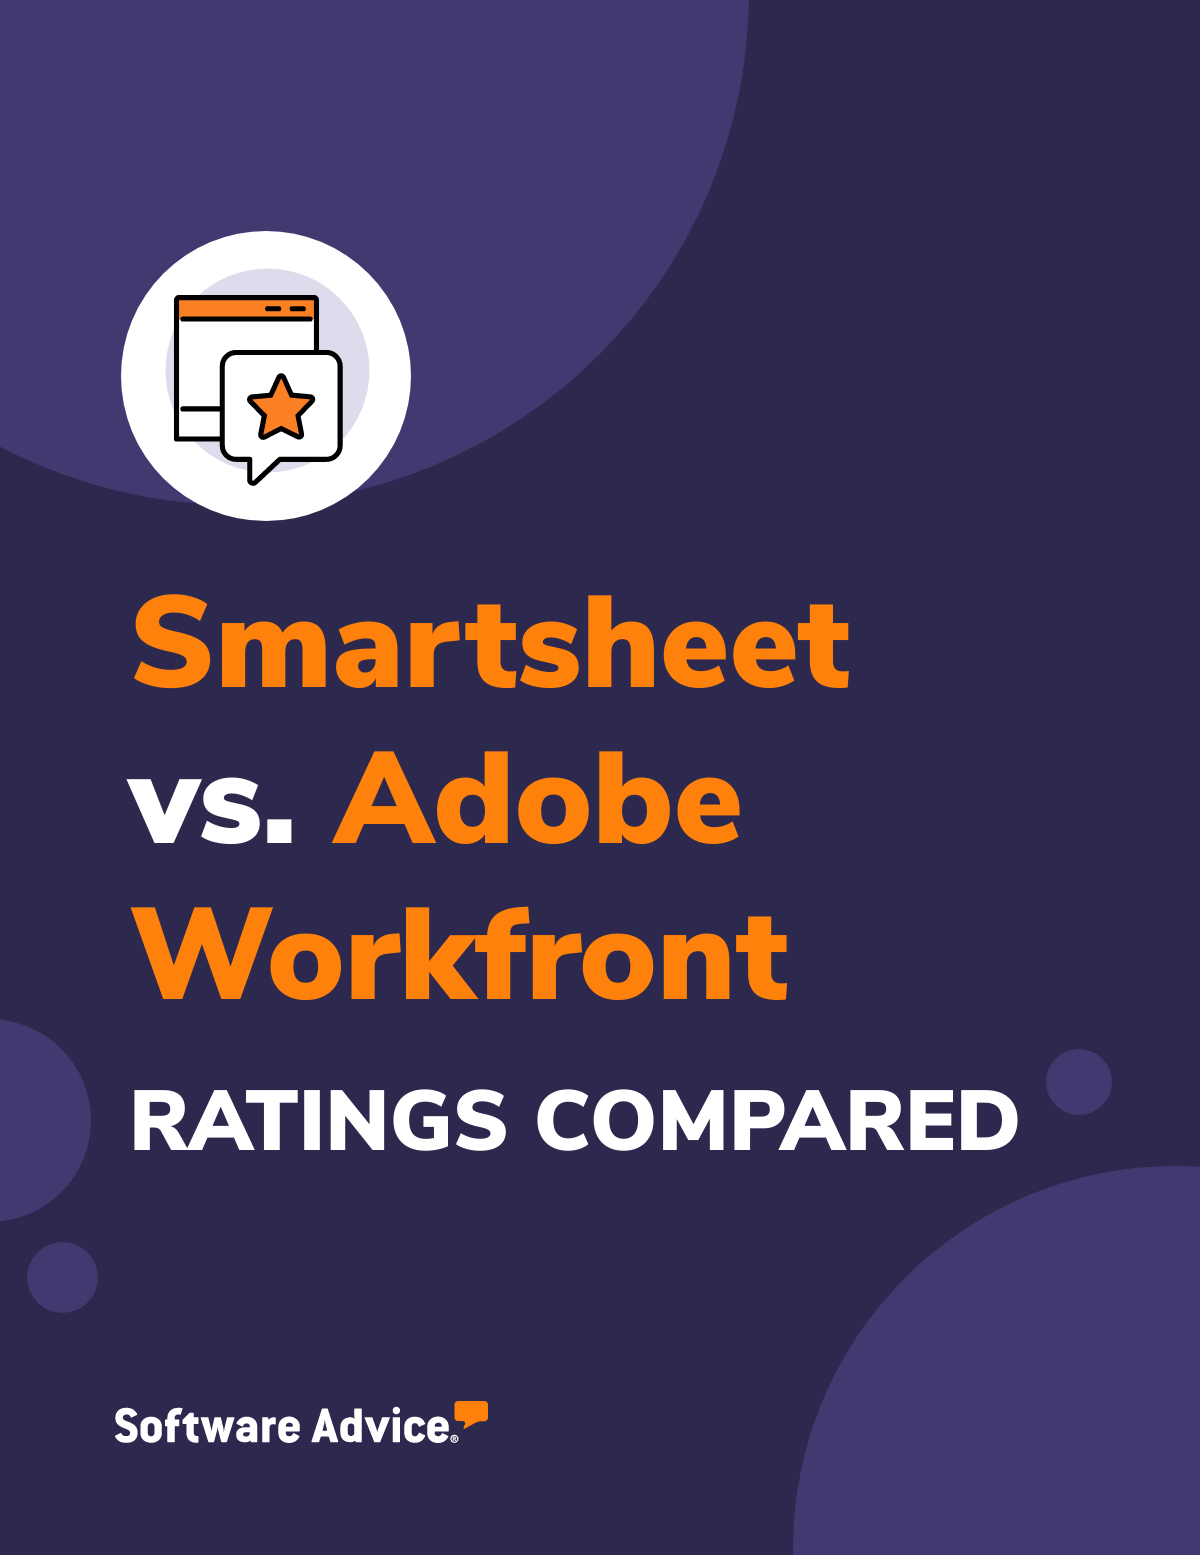 Smartsheet vs Adobe Workfront Ratings Compared